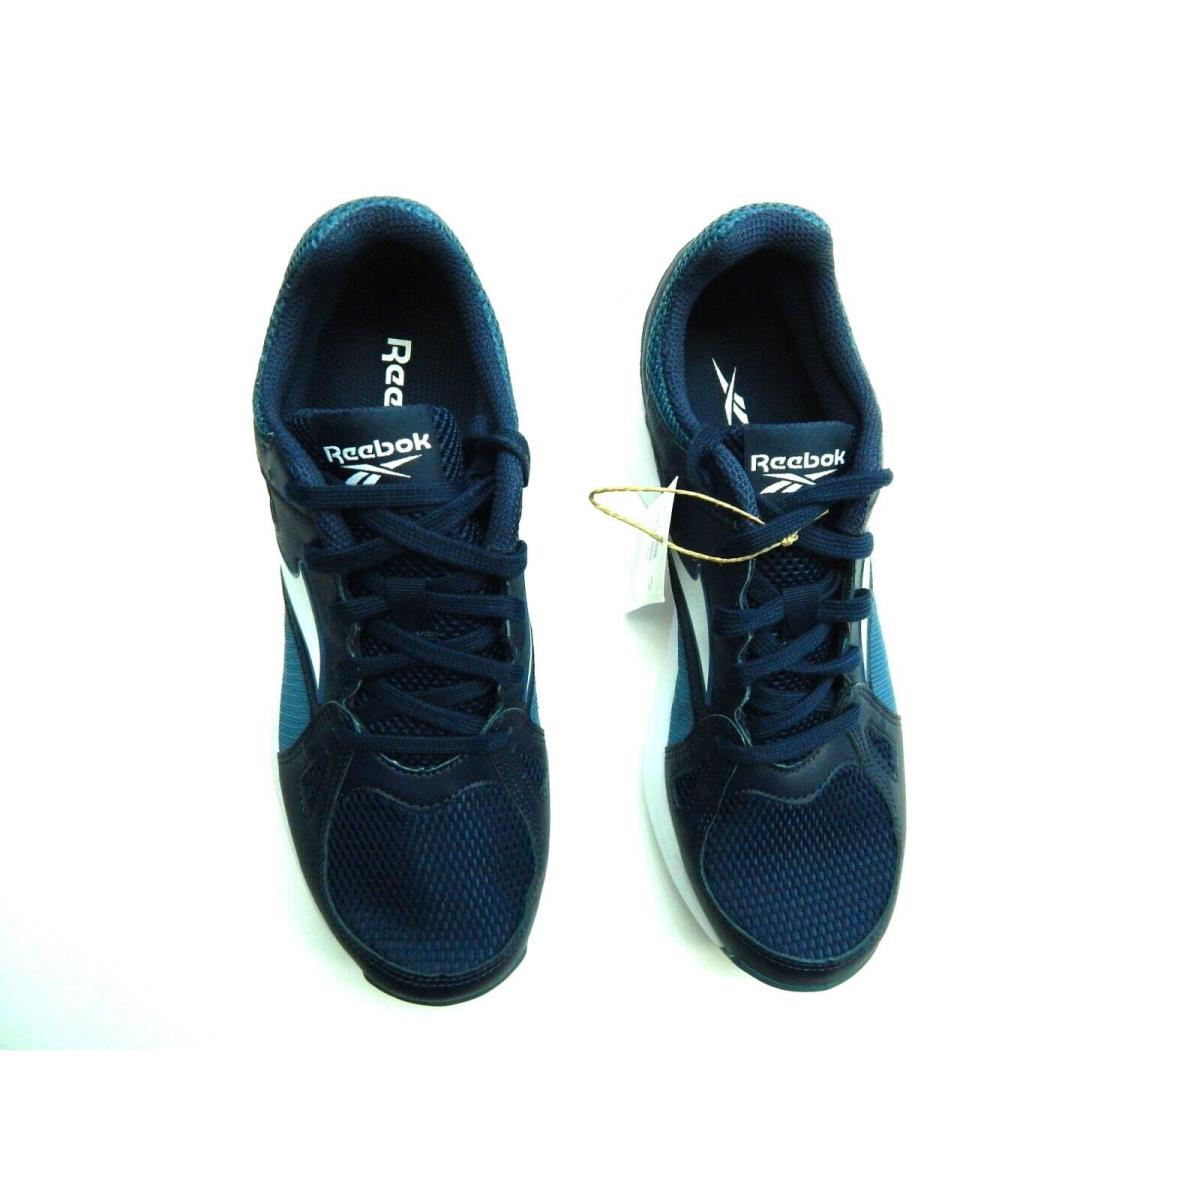 Reebok shoes Advanced Trainette - blue white 6